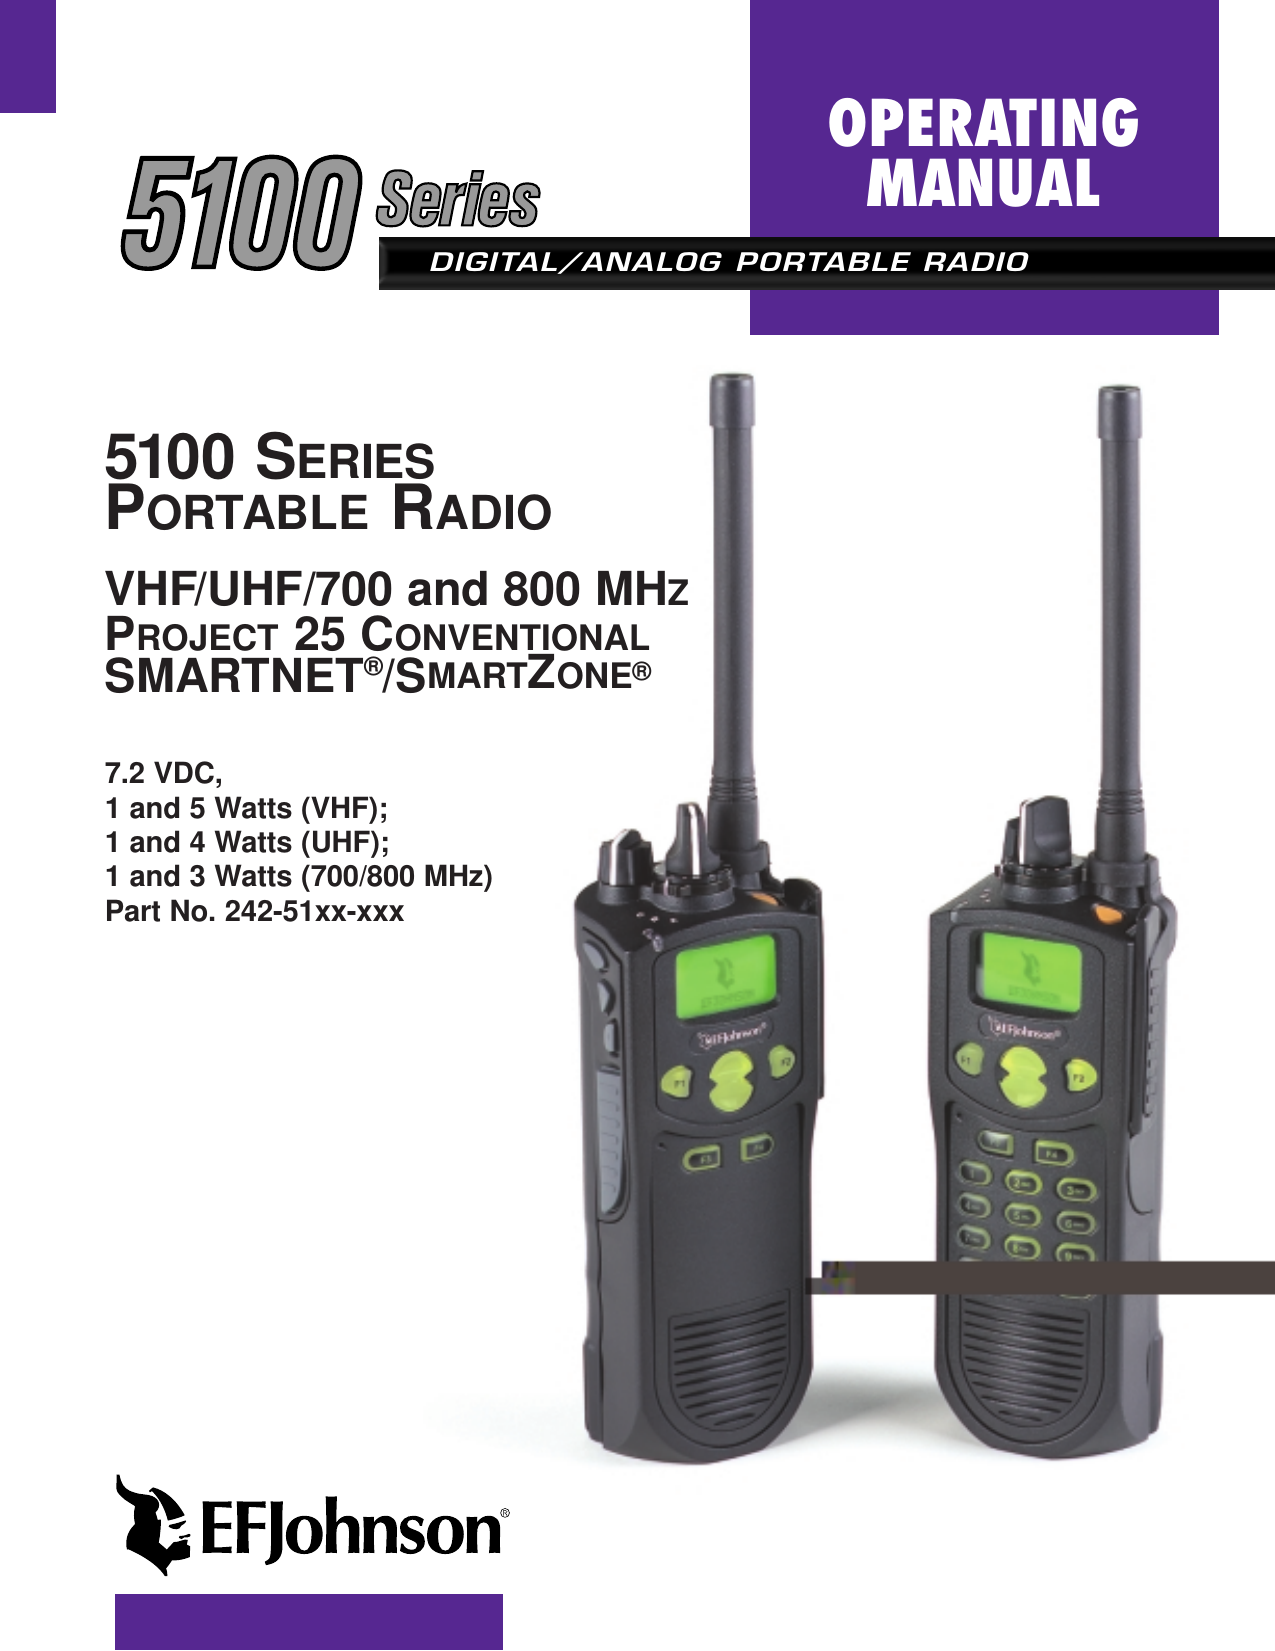 DIGITAL/ANALOG PORTABLE RADIOOPERATINGMANUAL5100 SERIESPORTABLE RADIOVHF/UHF/700 and 800 MHZPROJECT 25 CONVENTIONALSMARTNET®/SMARTZONE®7.2 VDC, 1 and 5 Watts (VHF);1 and 4 Watts (UHF);1 and 3 Watts (700/800 MHz) Part No. 242-51xx-xxx